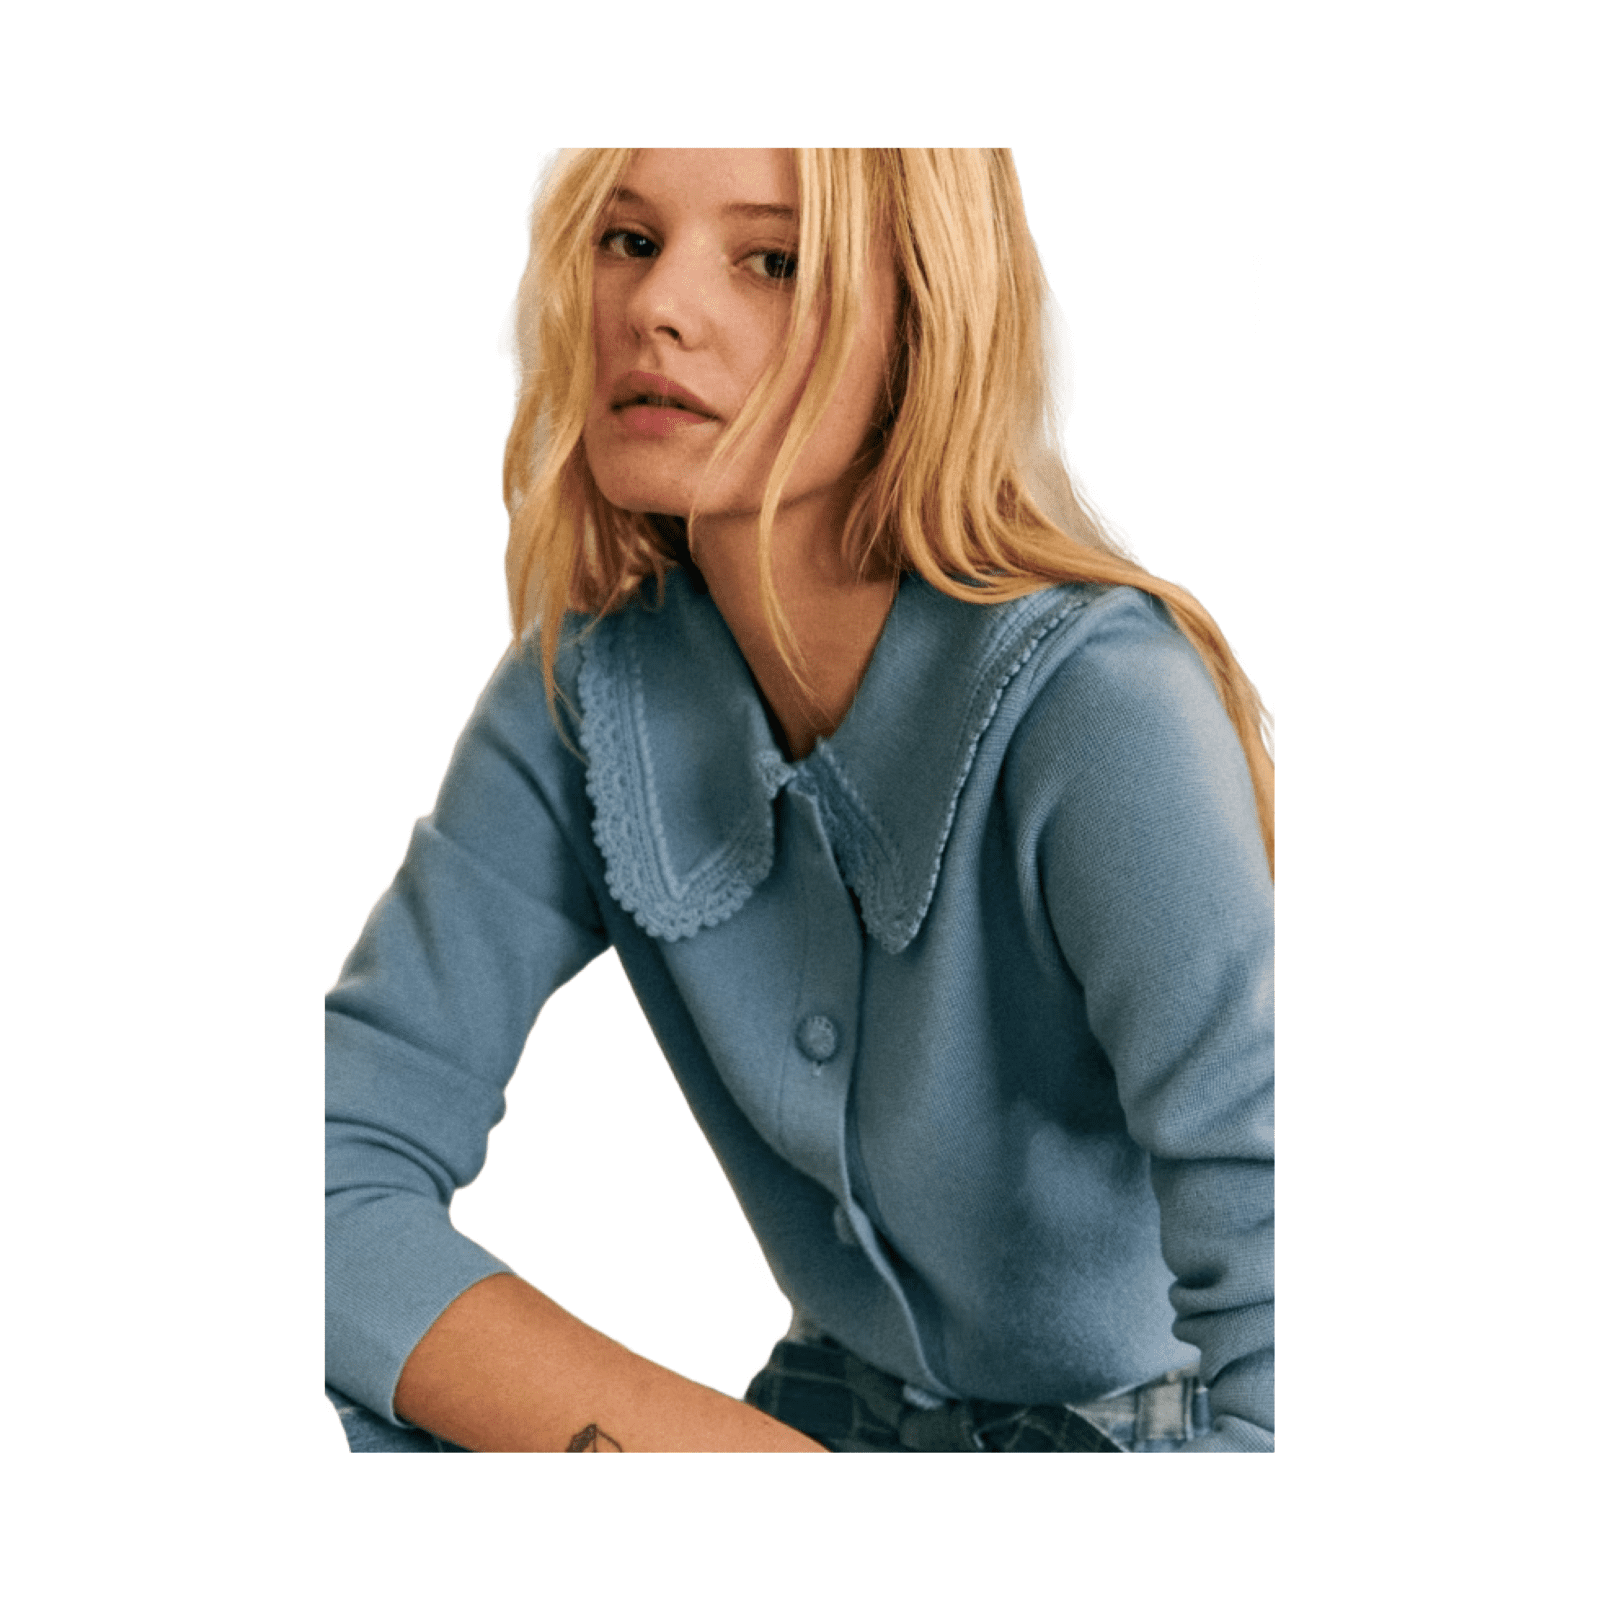 woman wearing a powder blue button up cardigan